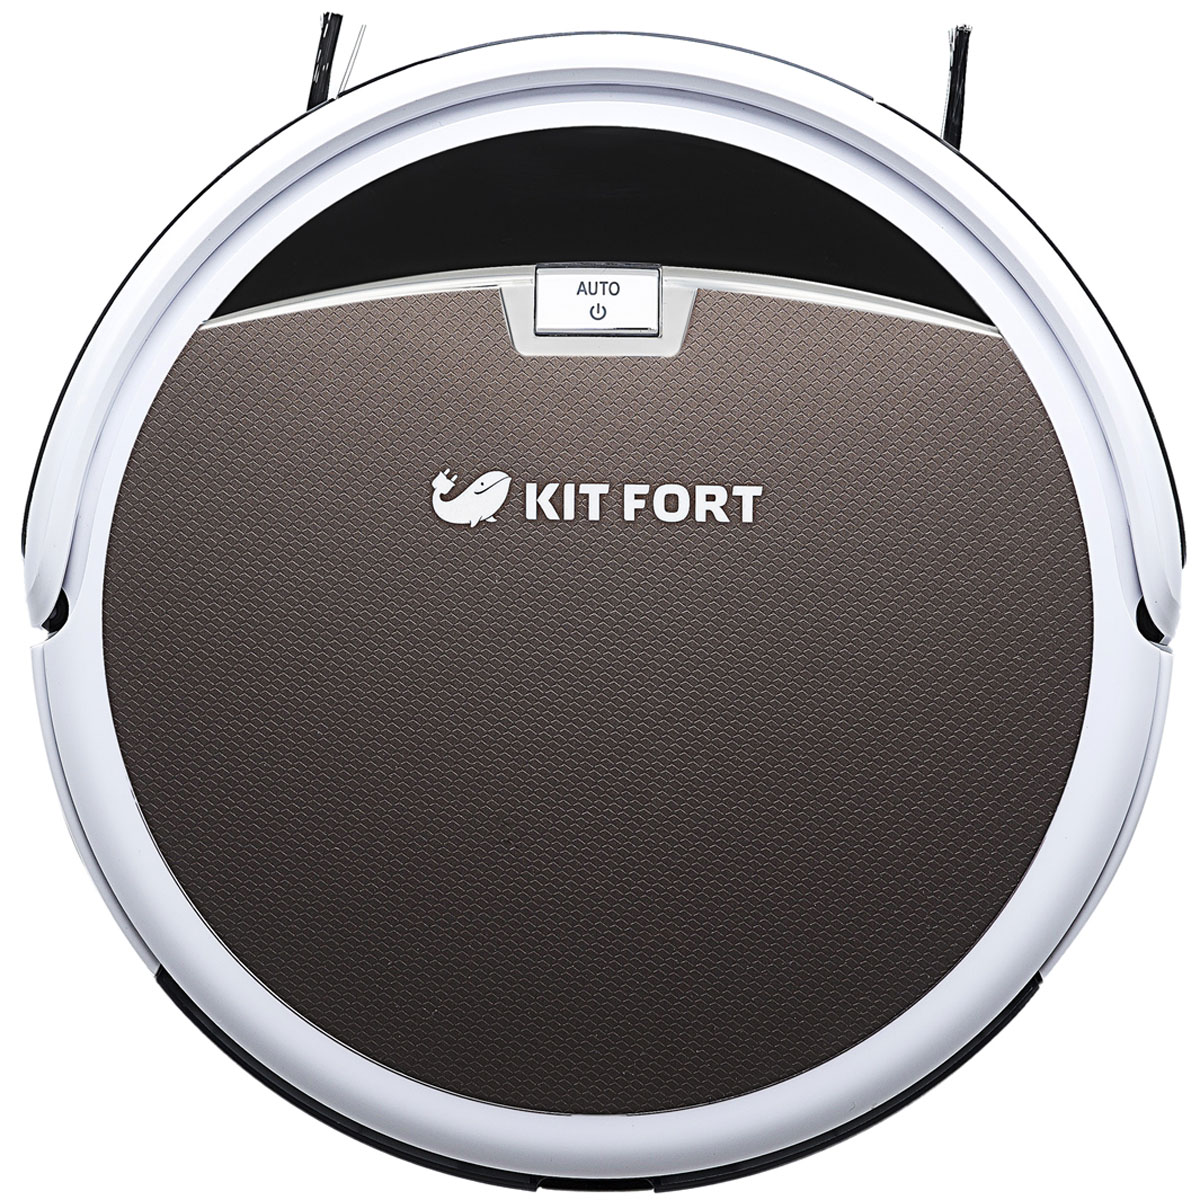 Kitfort KT-519-4, Brown робот-пылесос